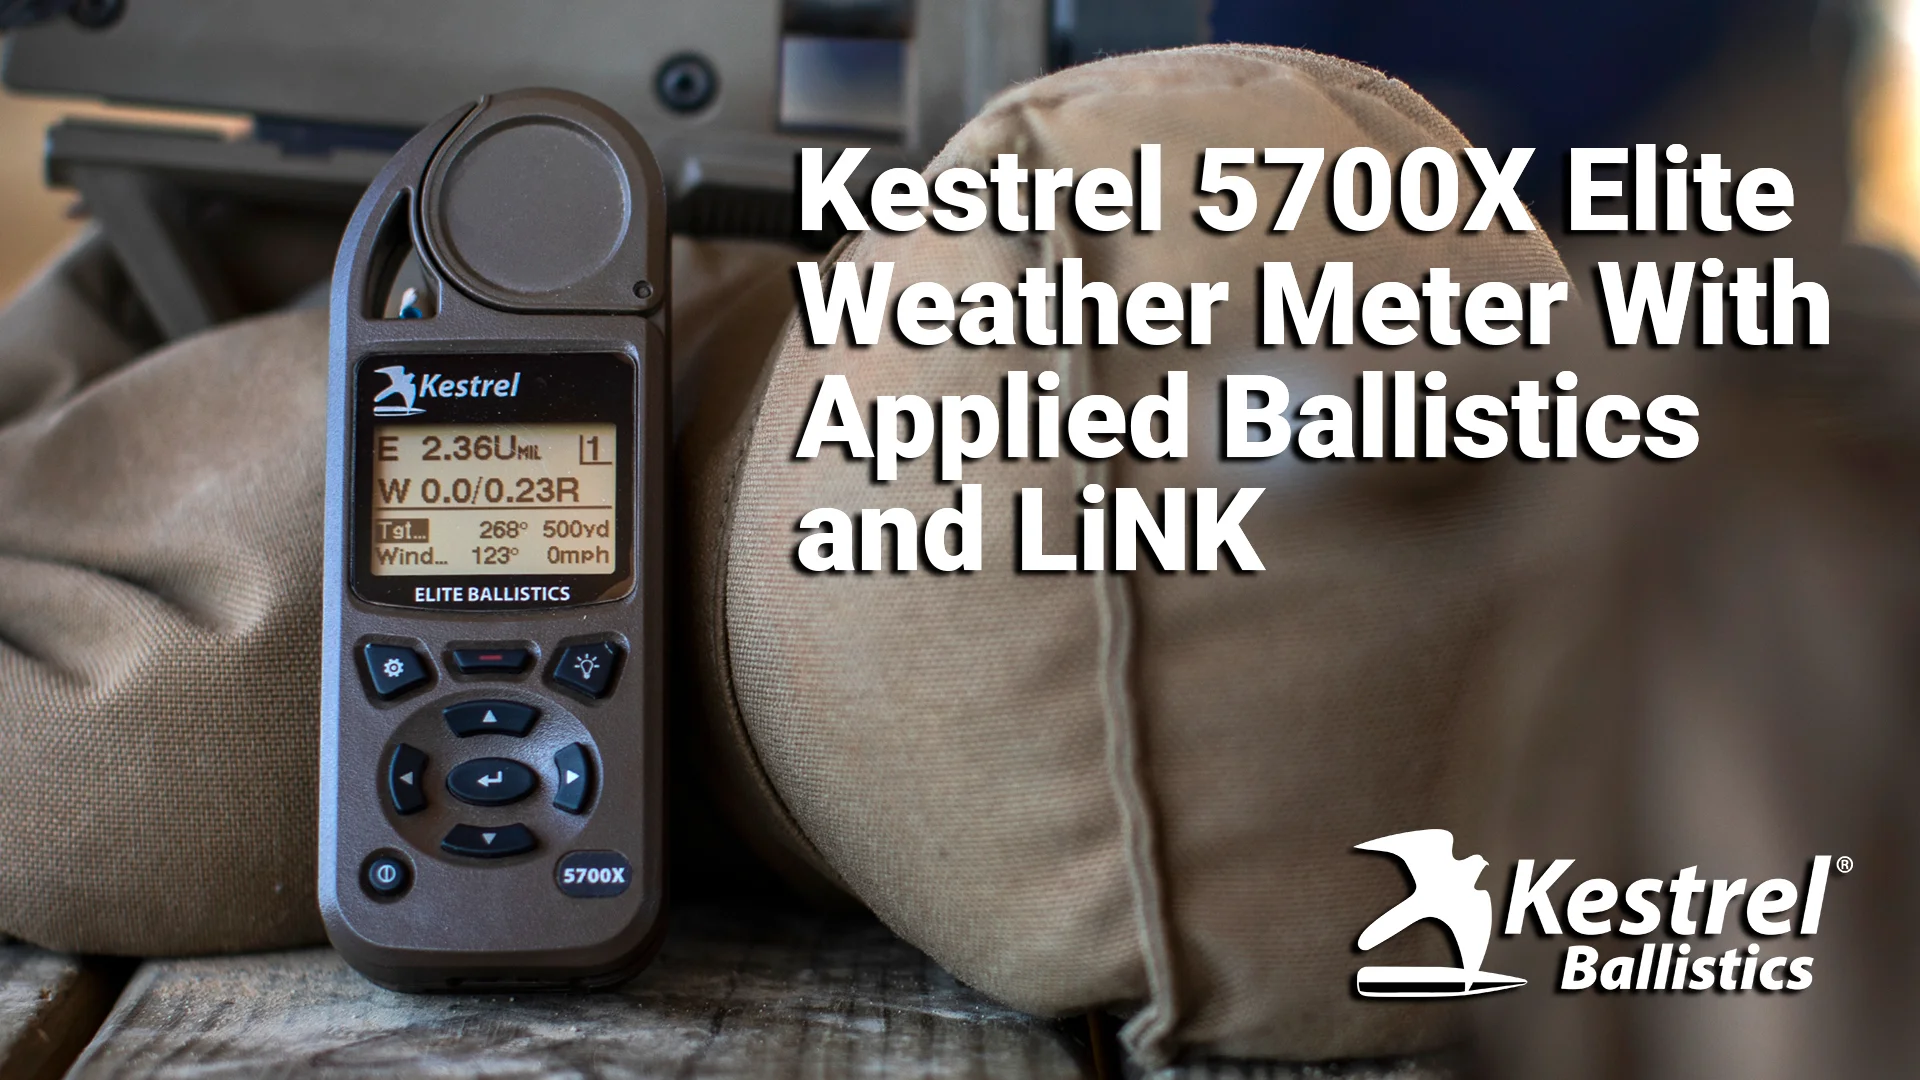 Kestrel 5700X Elite Weather Meter With Applied Ballistics and LiNK